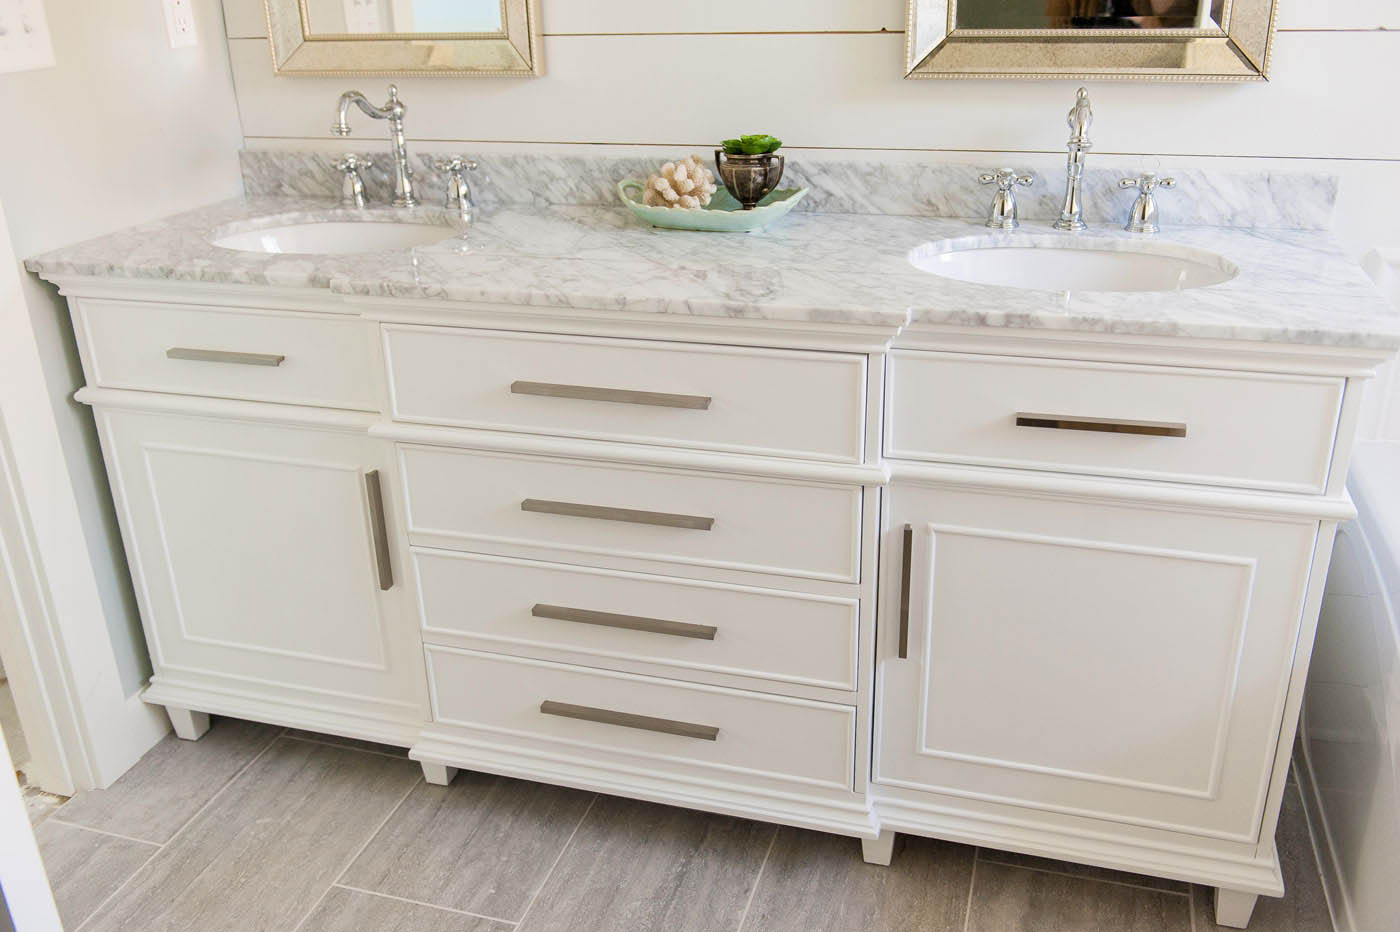 12 Bathroom Sink & Vanity Ideas for Your Remodel